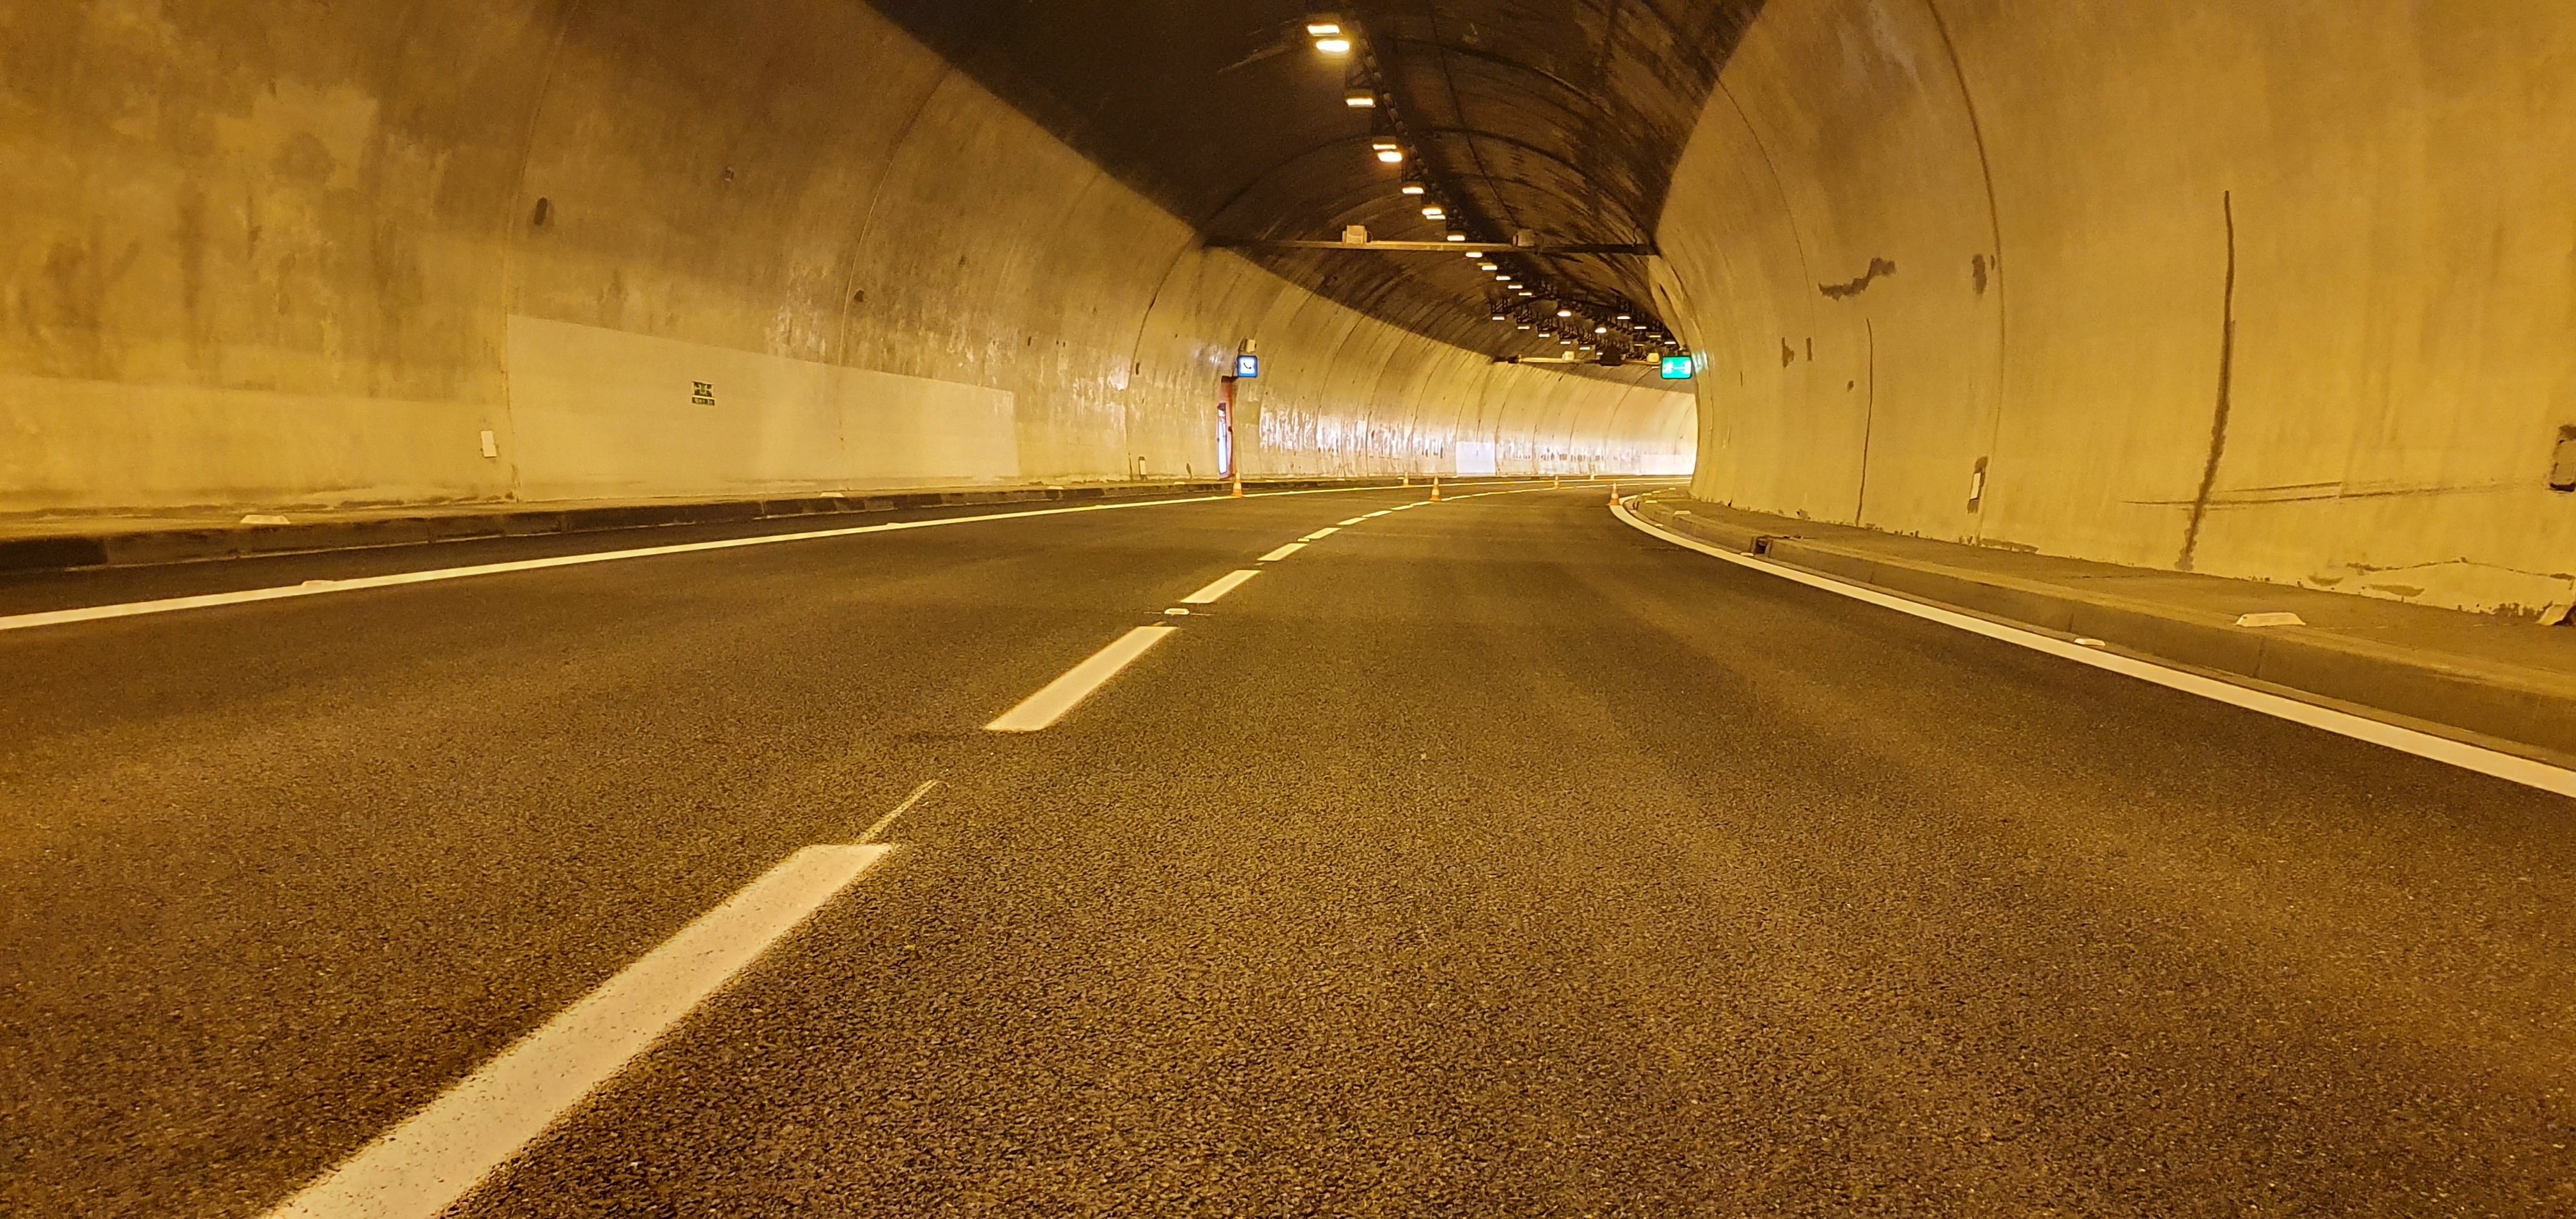 I/23 Pisárecký tunel - Road and bridge construction